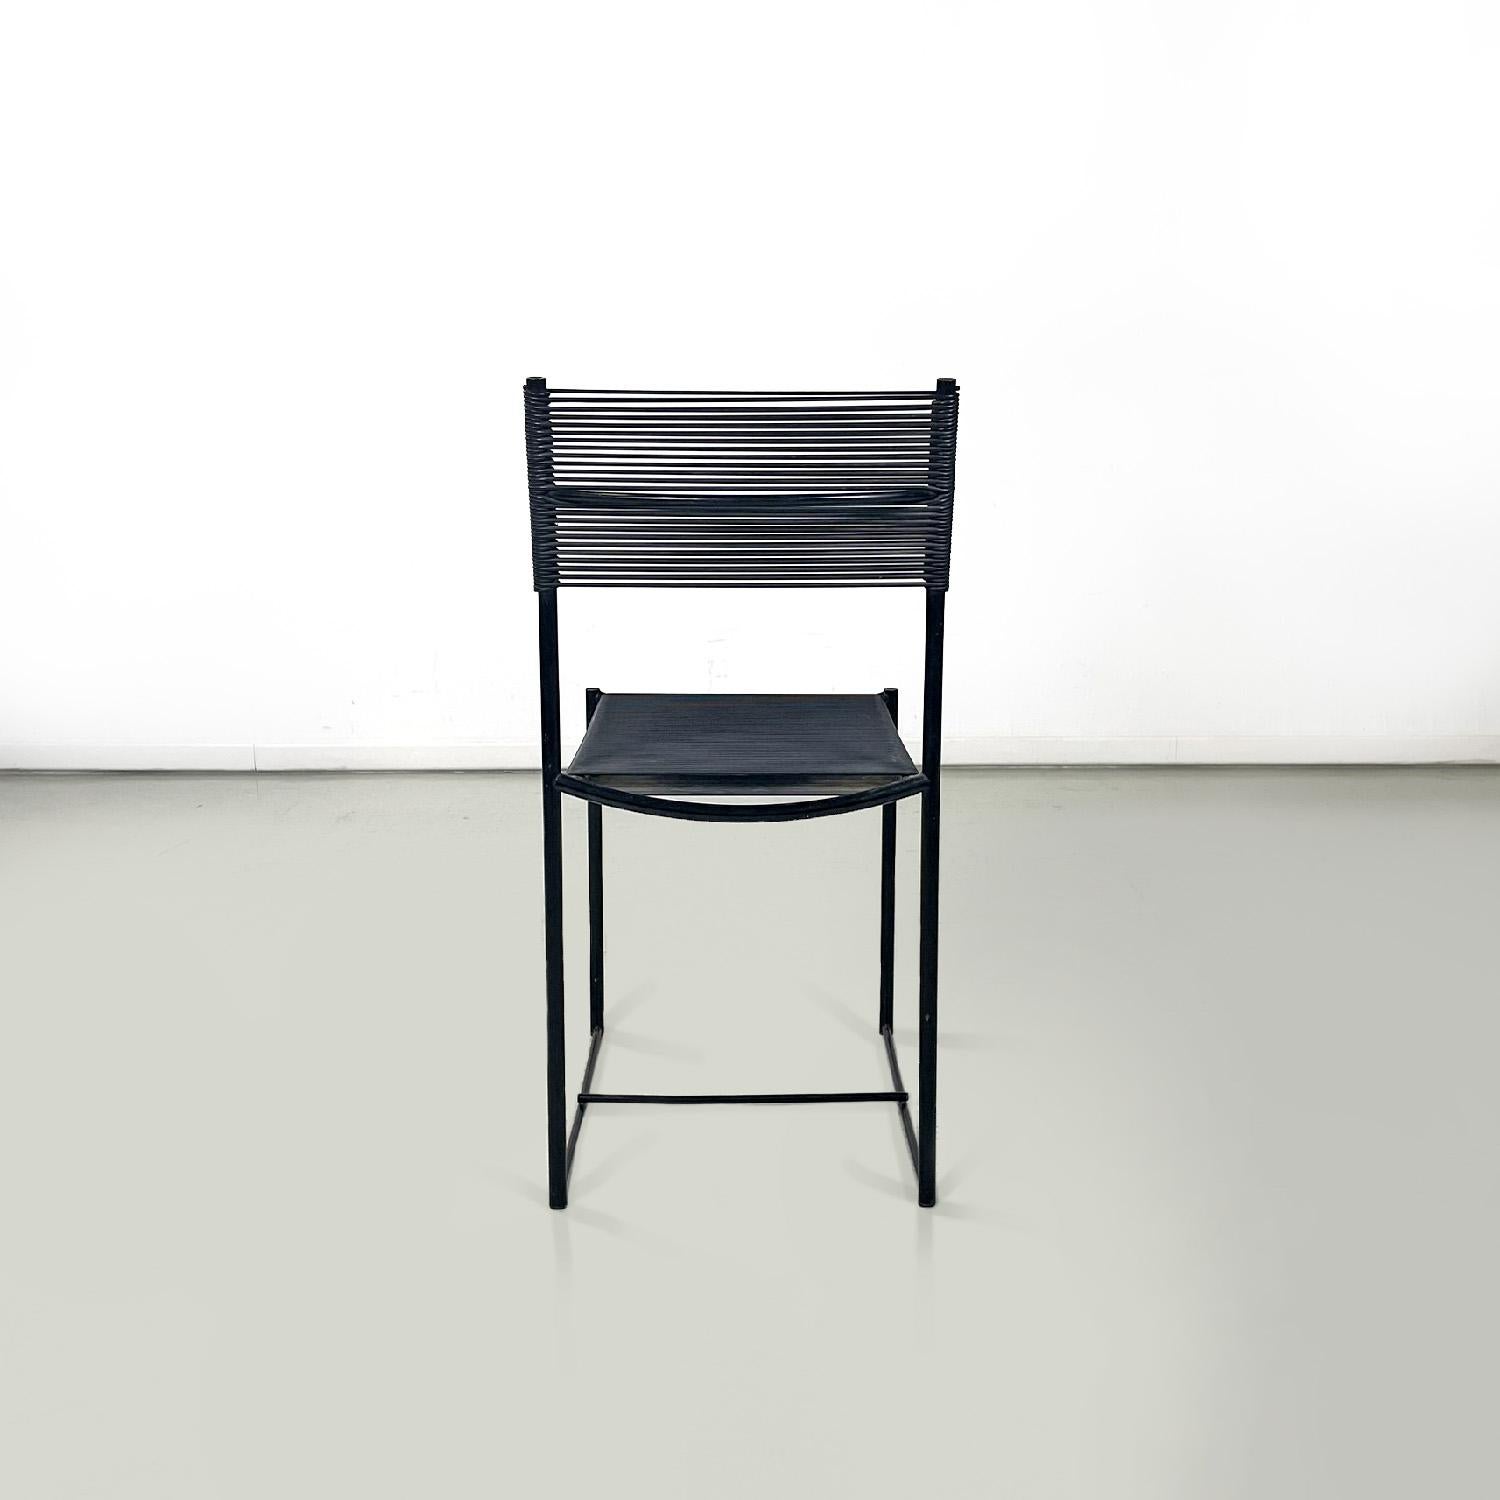 Late 20th Century Italian modern black chairs Spaghetti by Giandomenico Belotti for Alias, 1980s For Sale